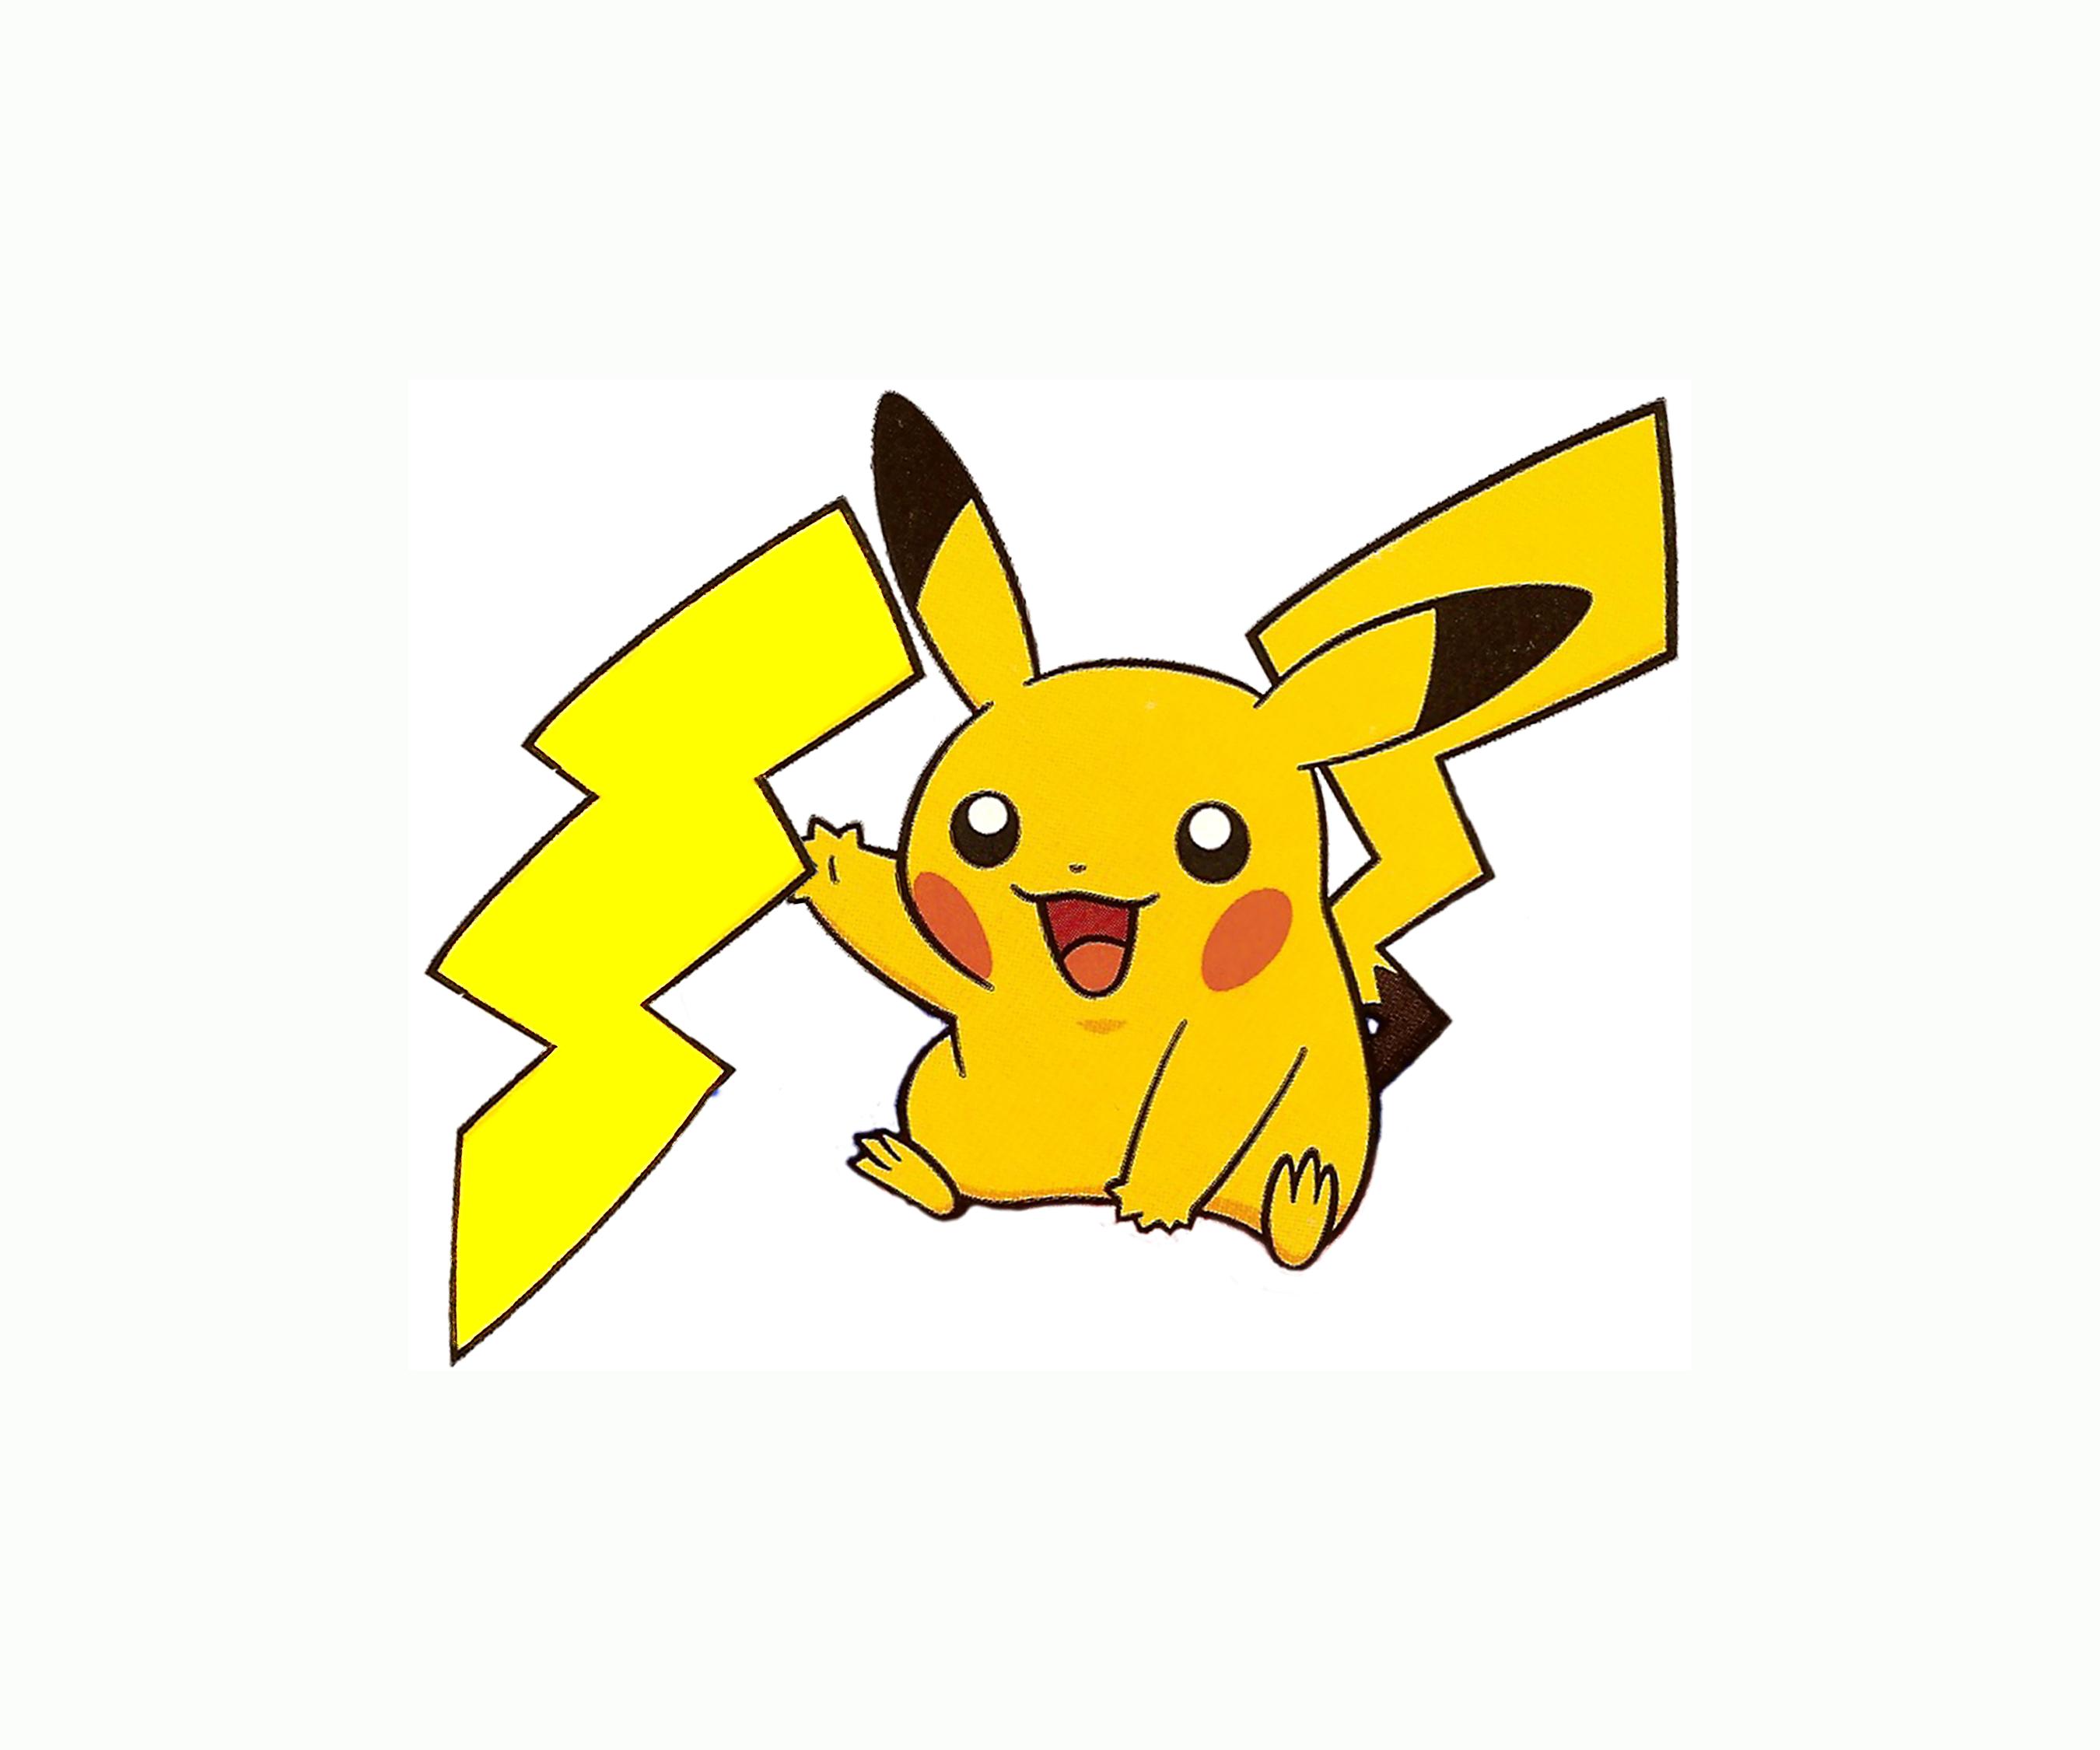 Pokemon, Pikachu, bolt, lightning - desktop wallpaper